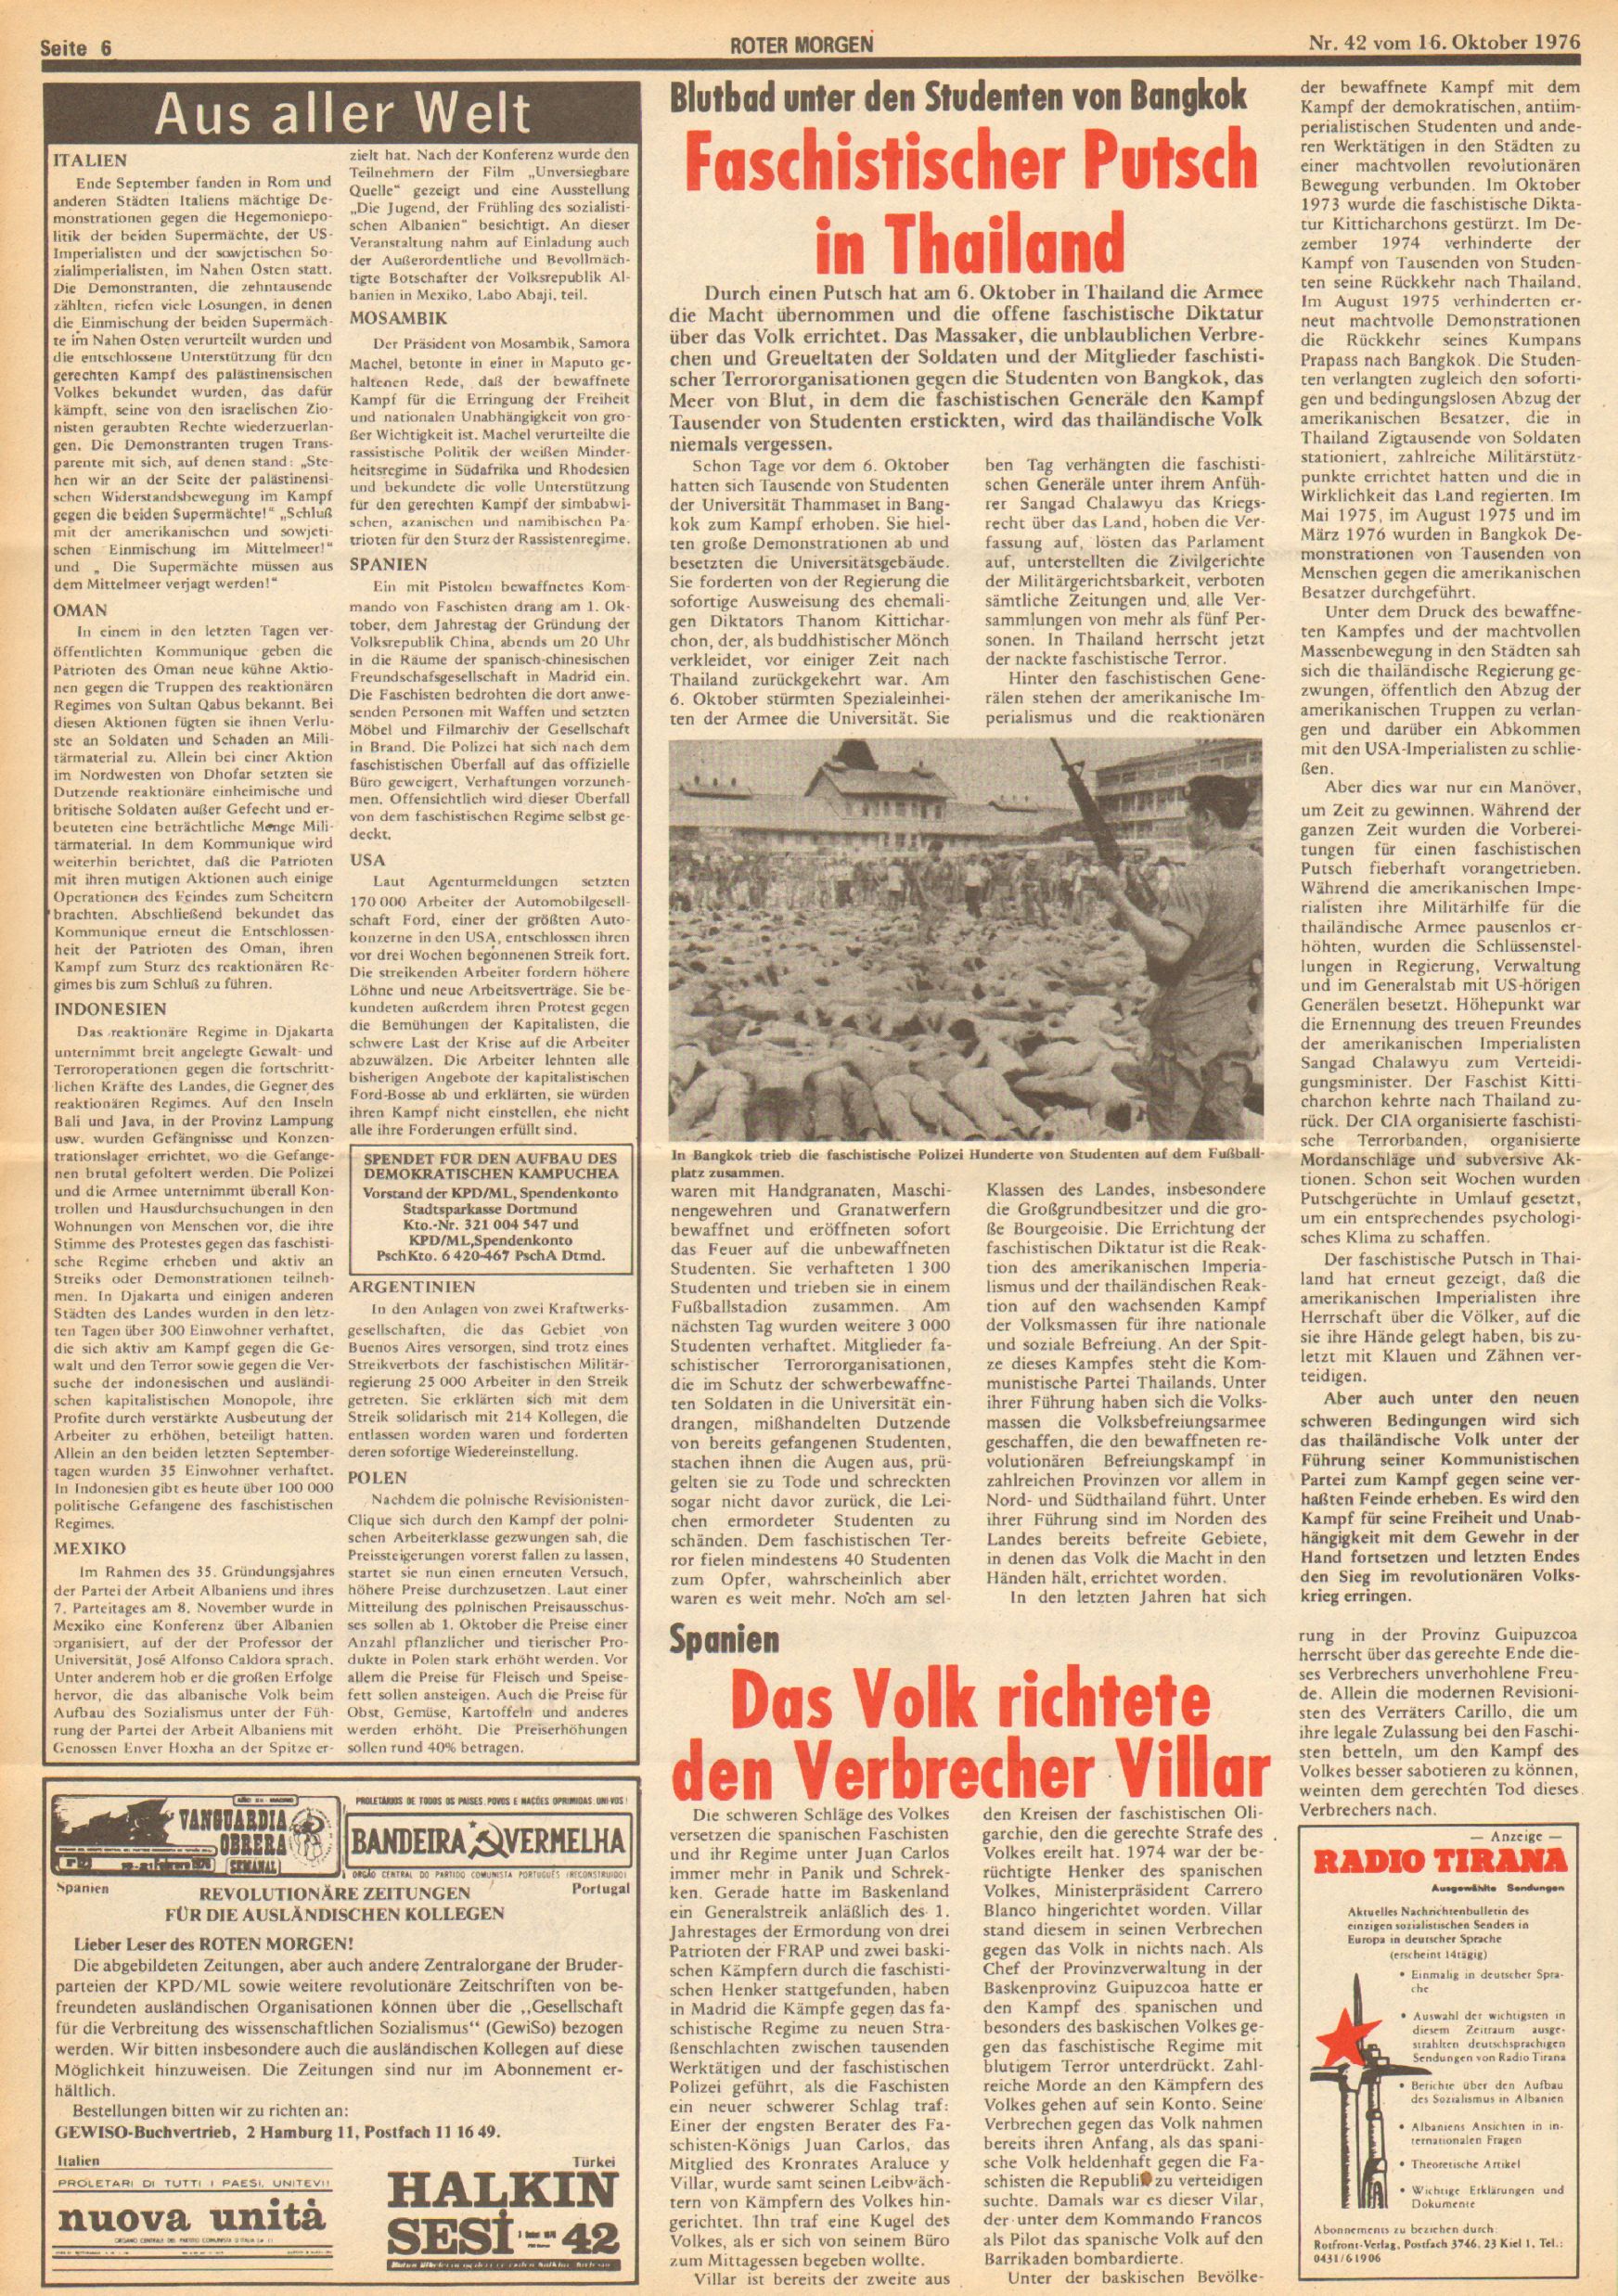 Roter Morgen, 10. Jg., 16. Oktober 1976, Nr. 42, Seite 6